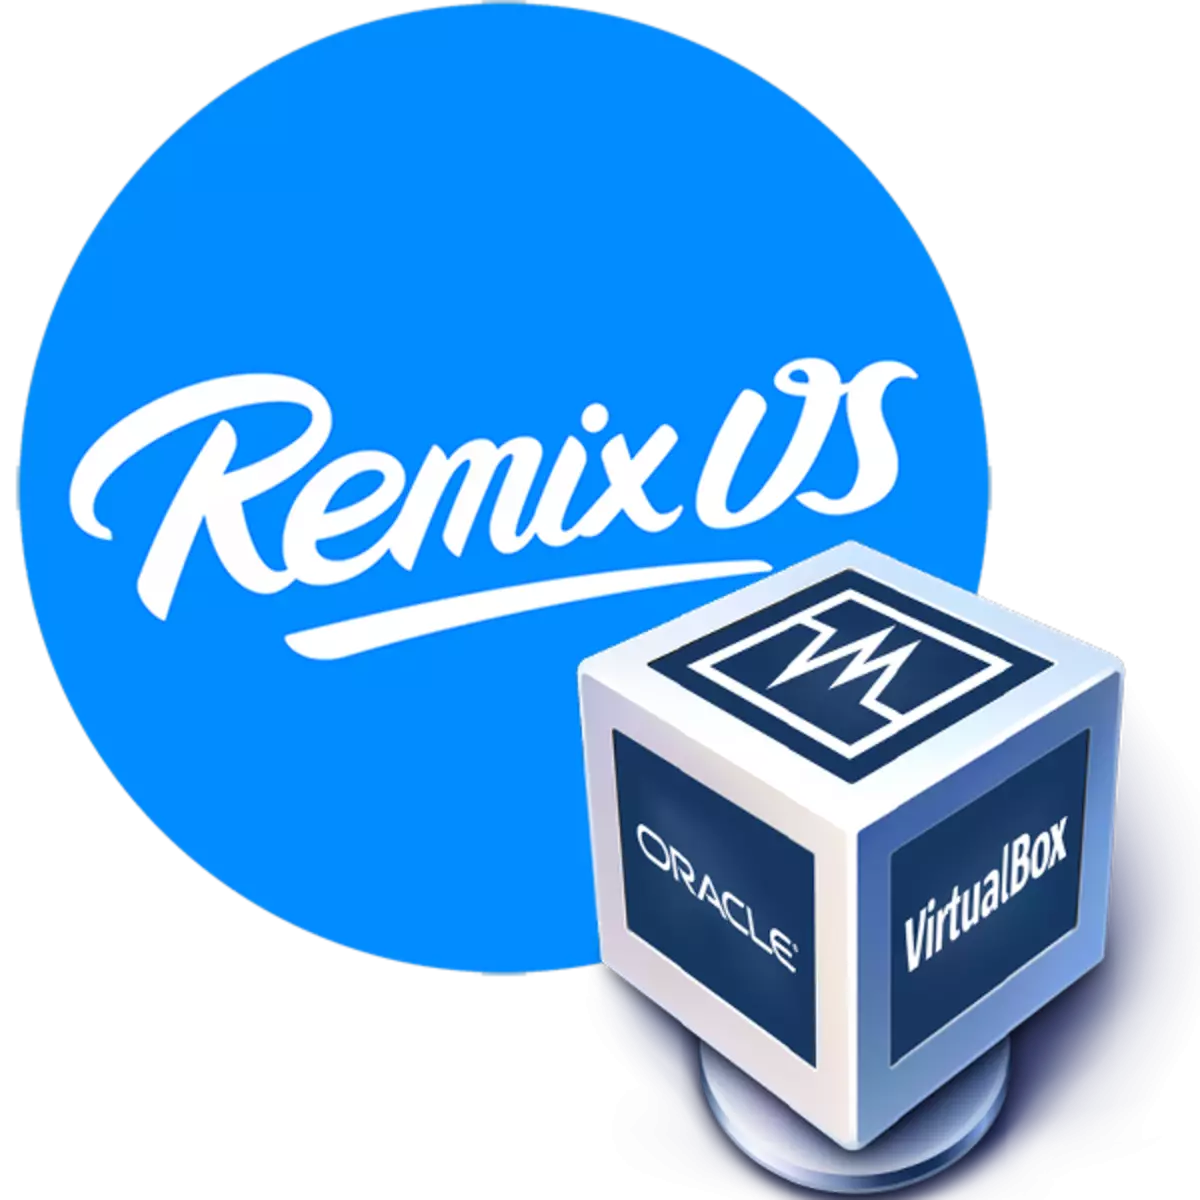 Kenya Remix OS ho Virtualbox